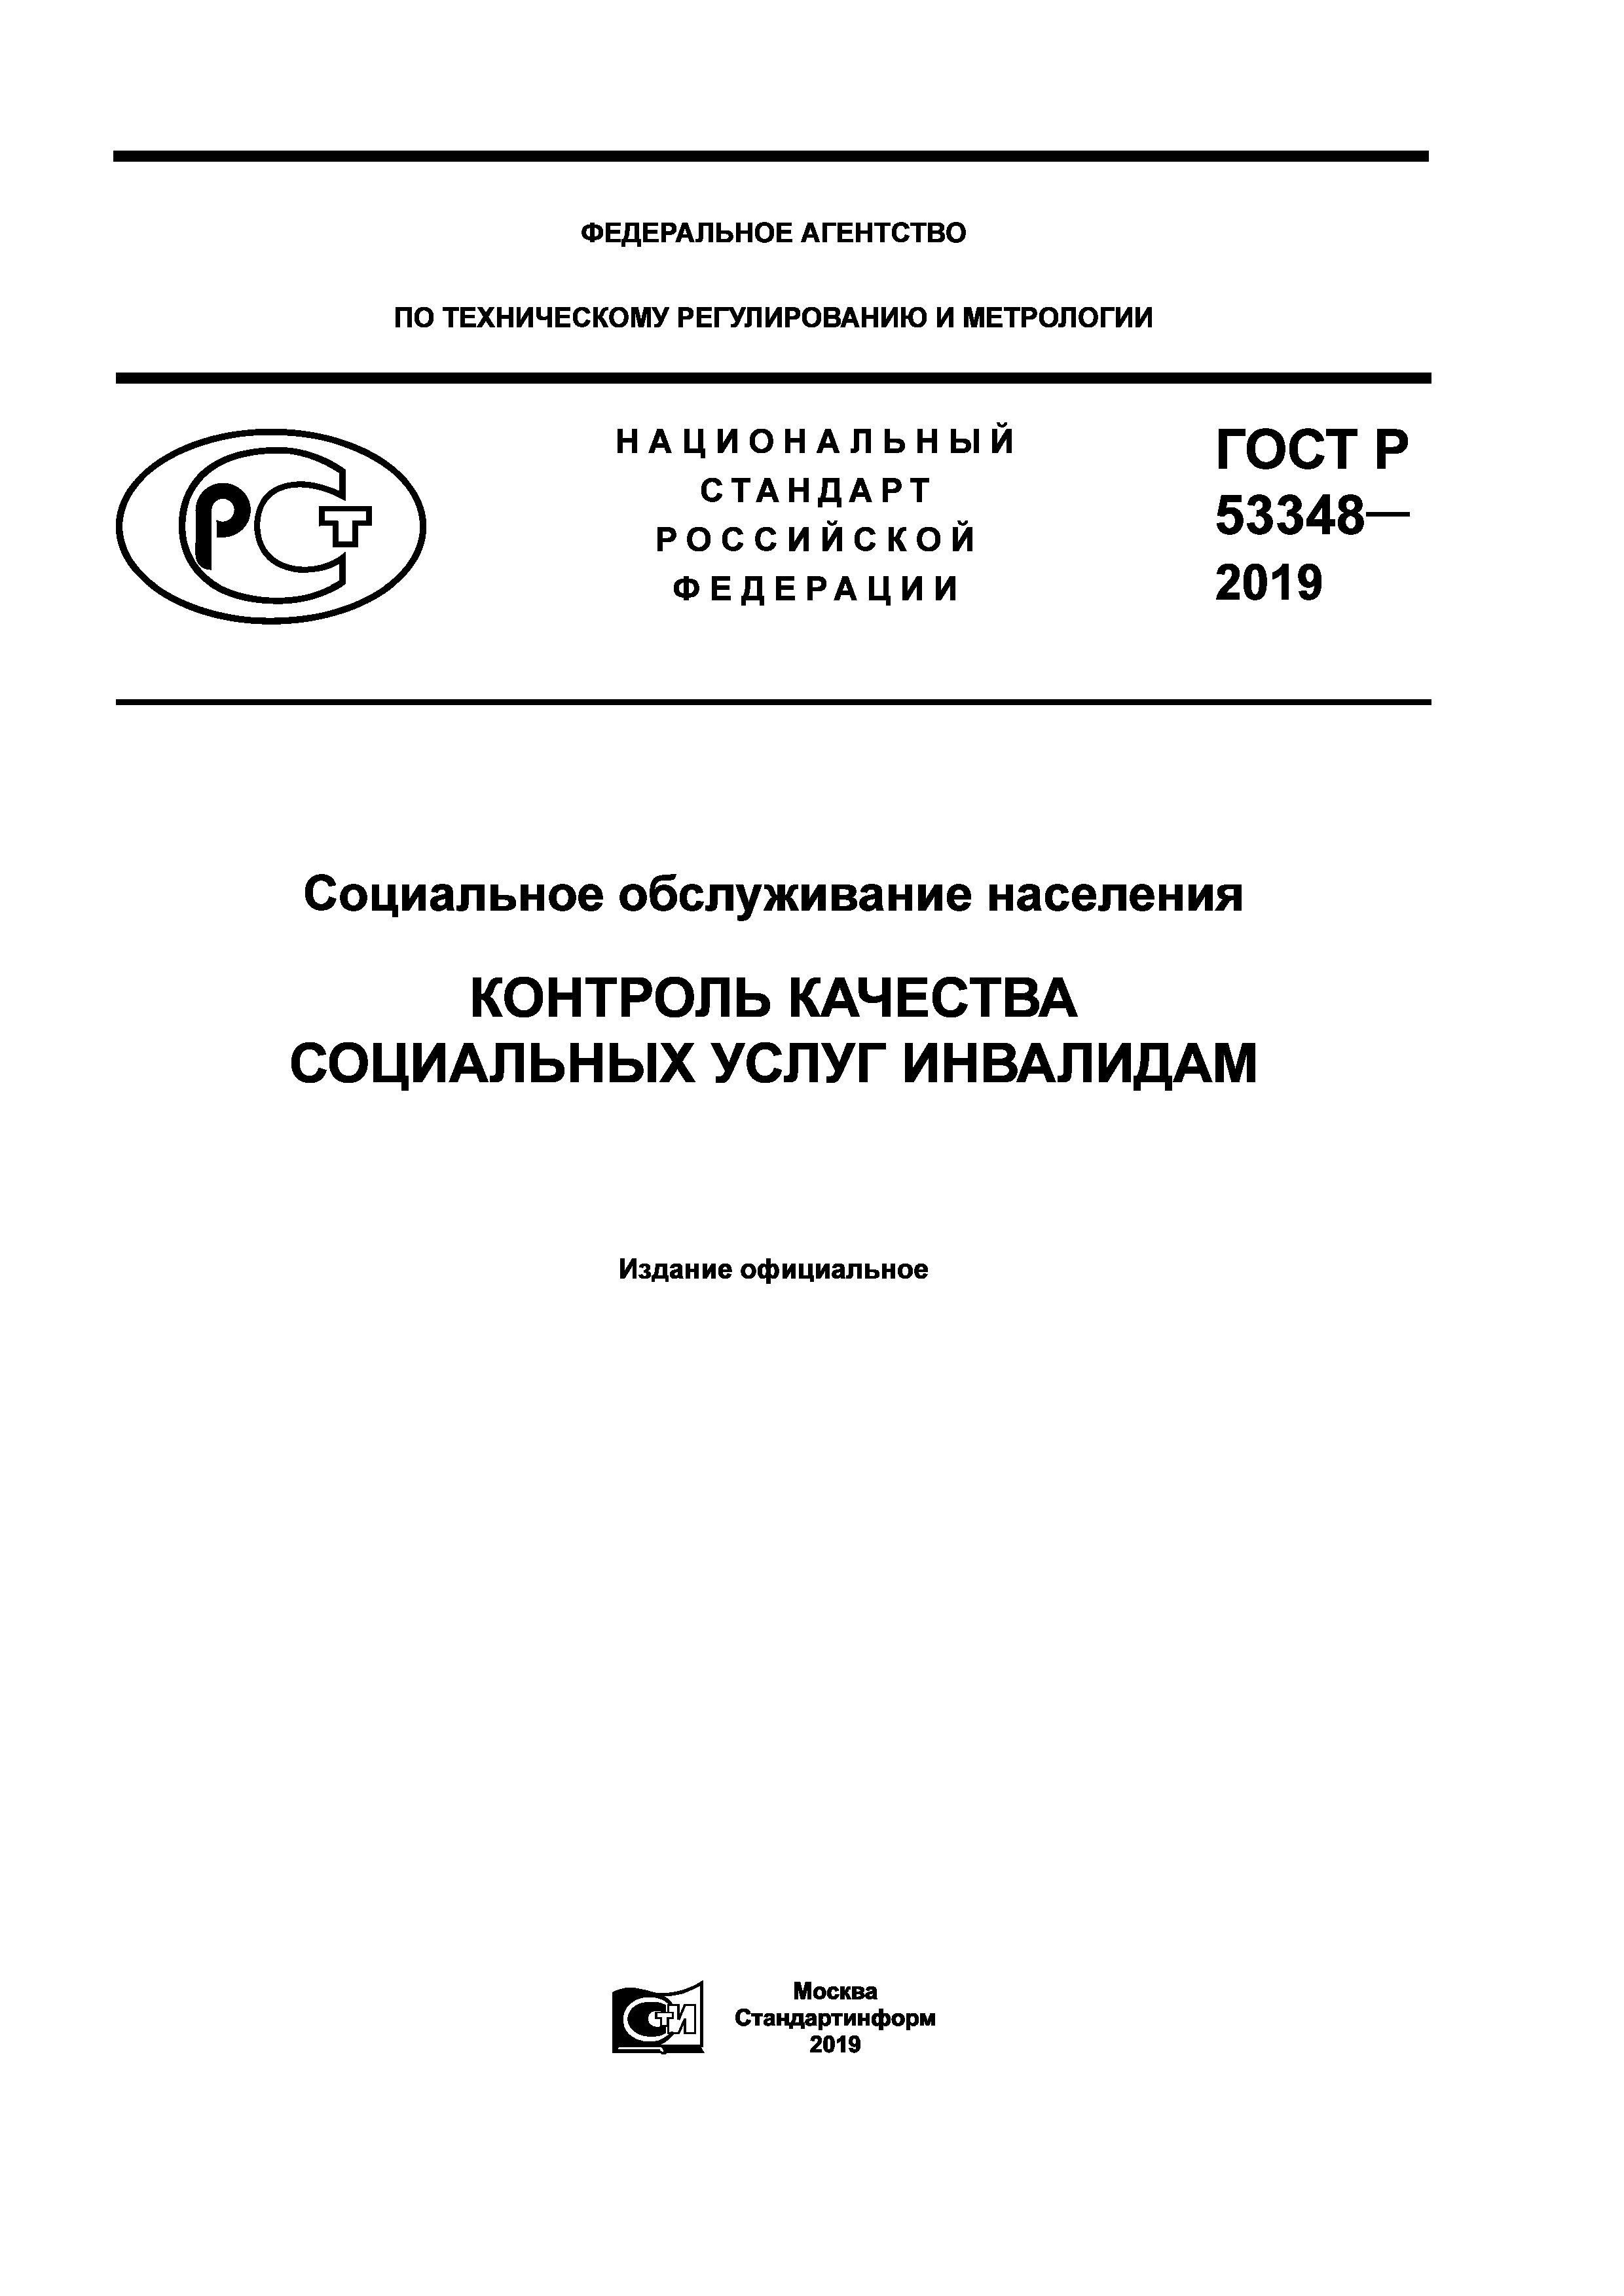 ГОСТ Р 53348-2019